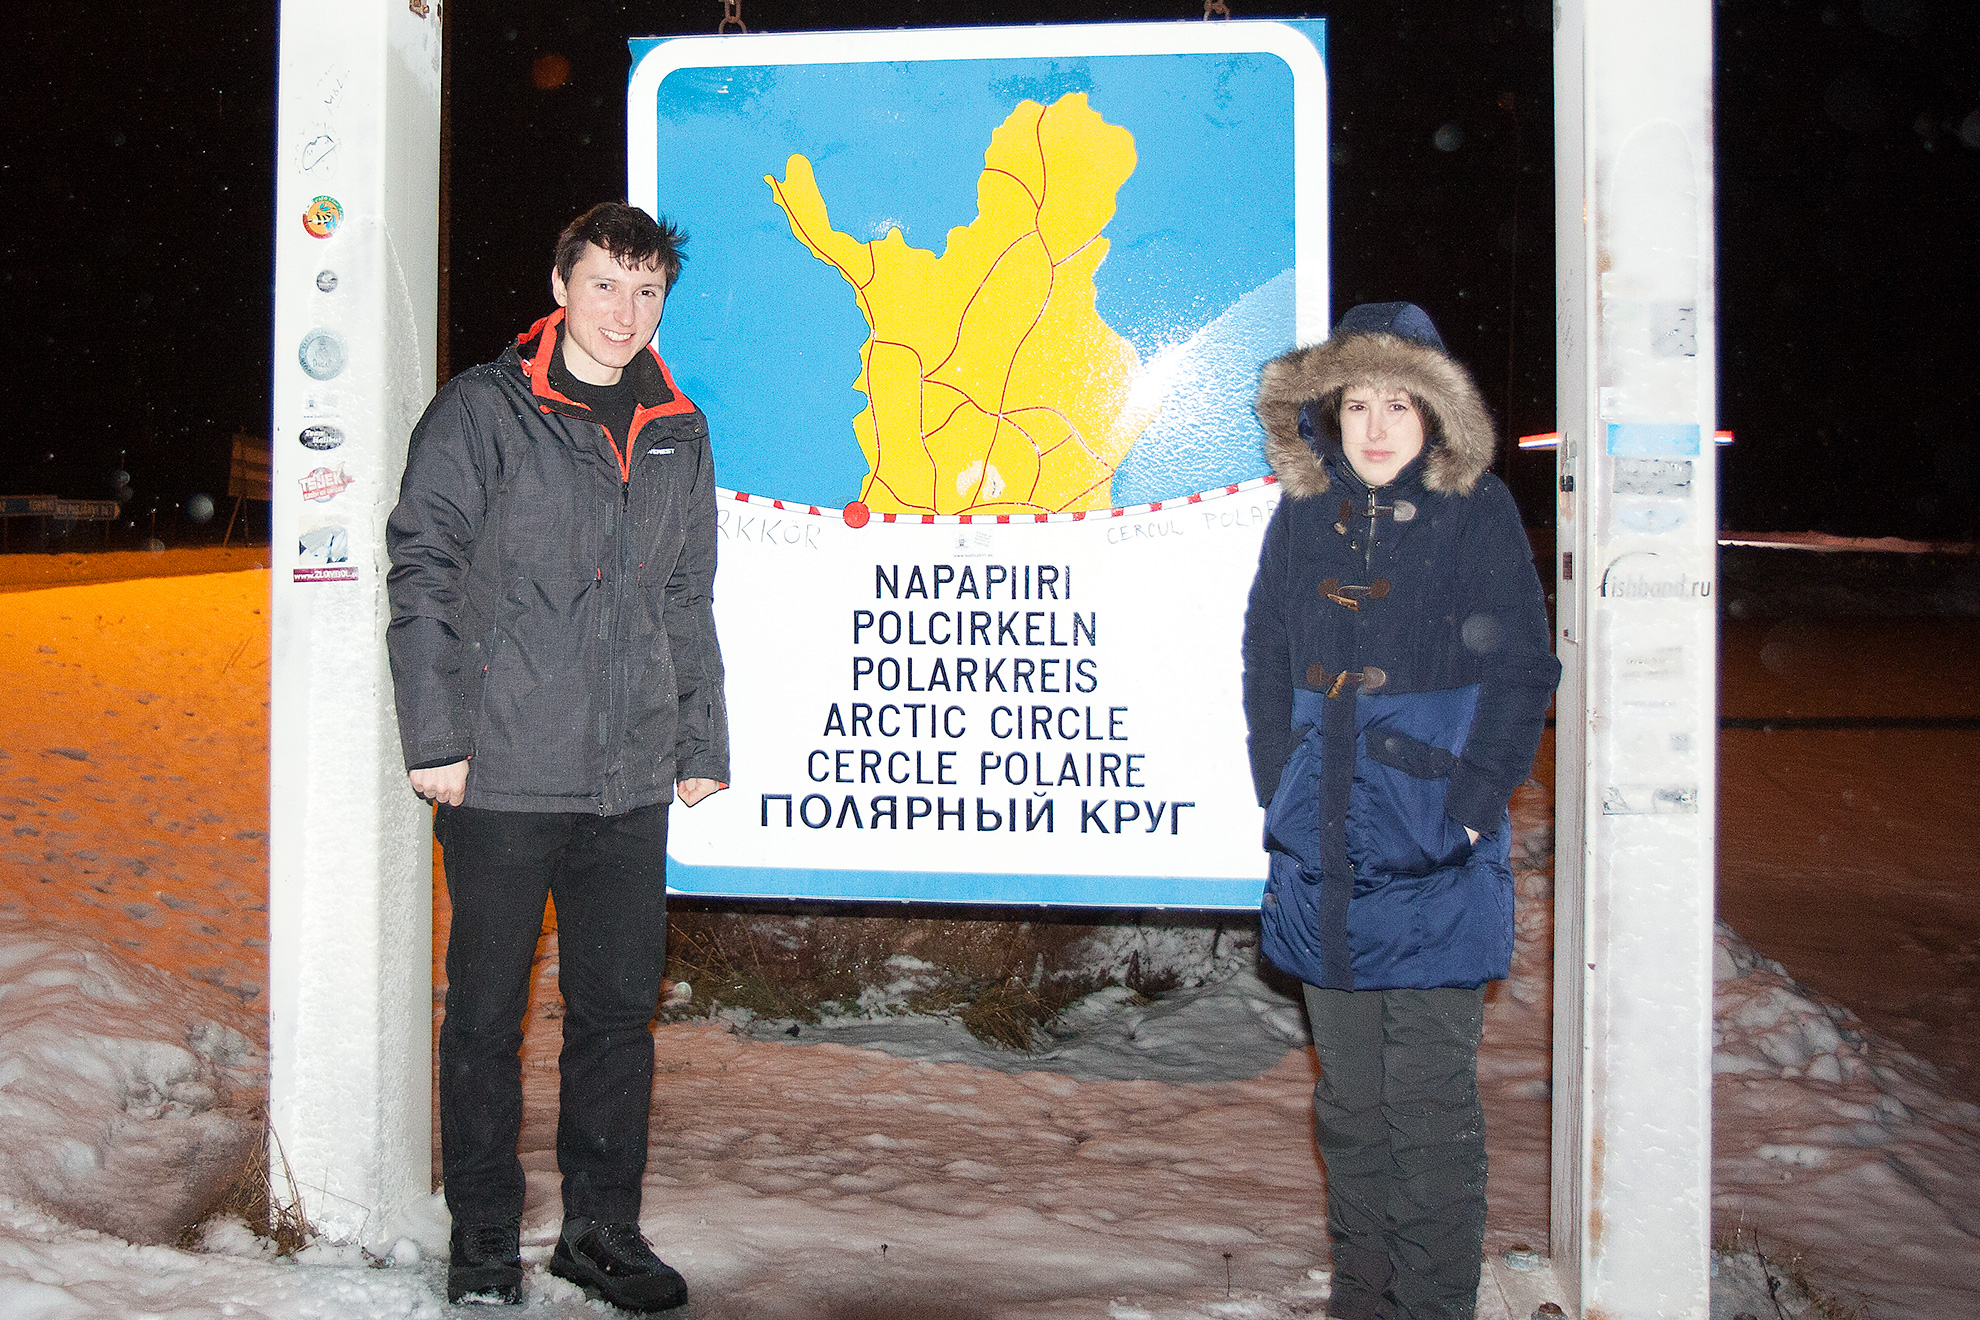 Me and Veronika at crossing arctic circle.